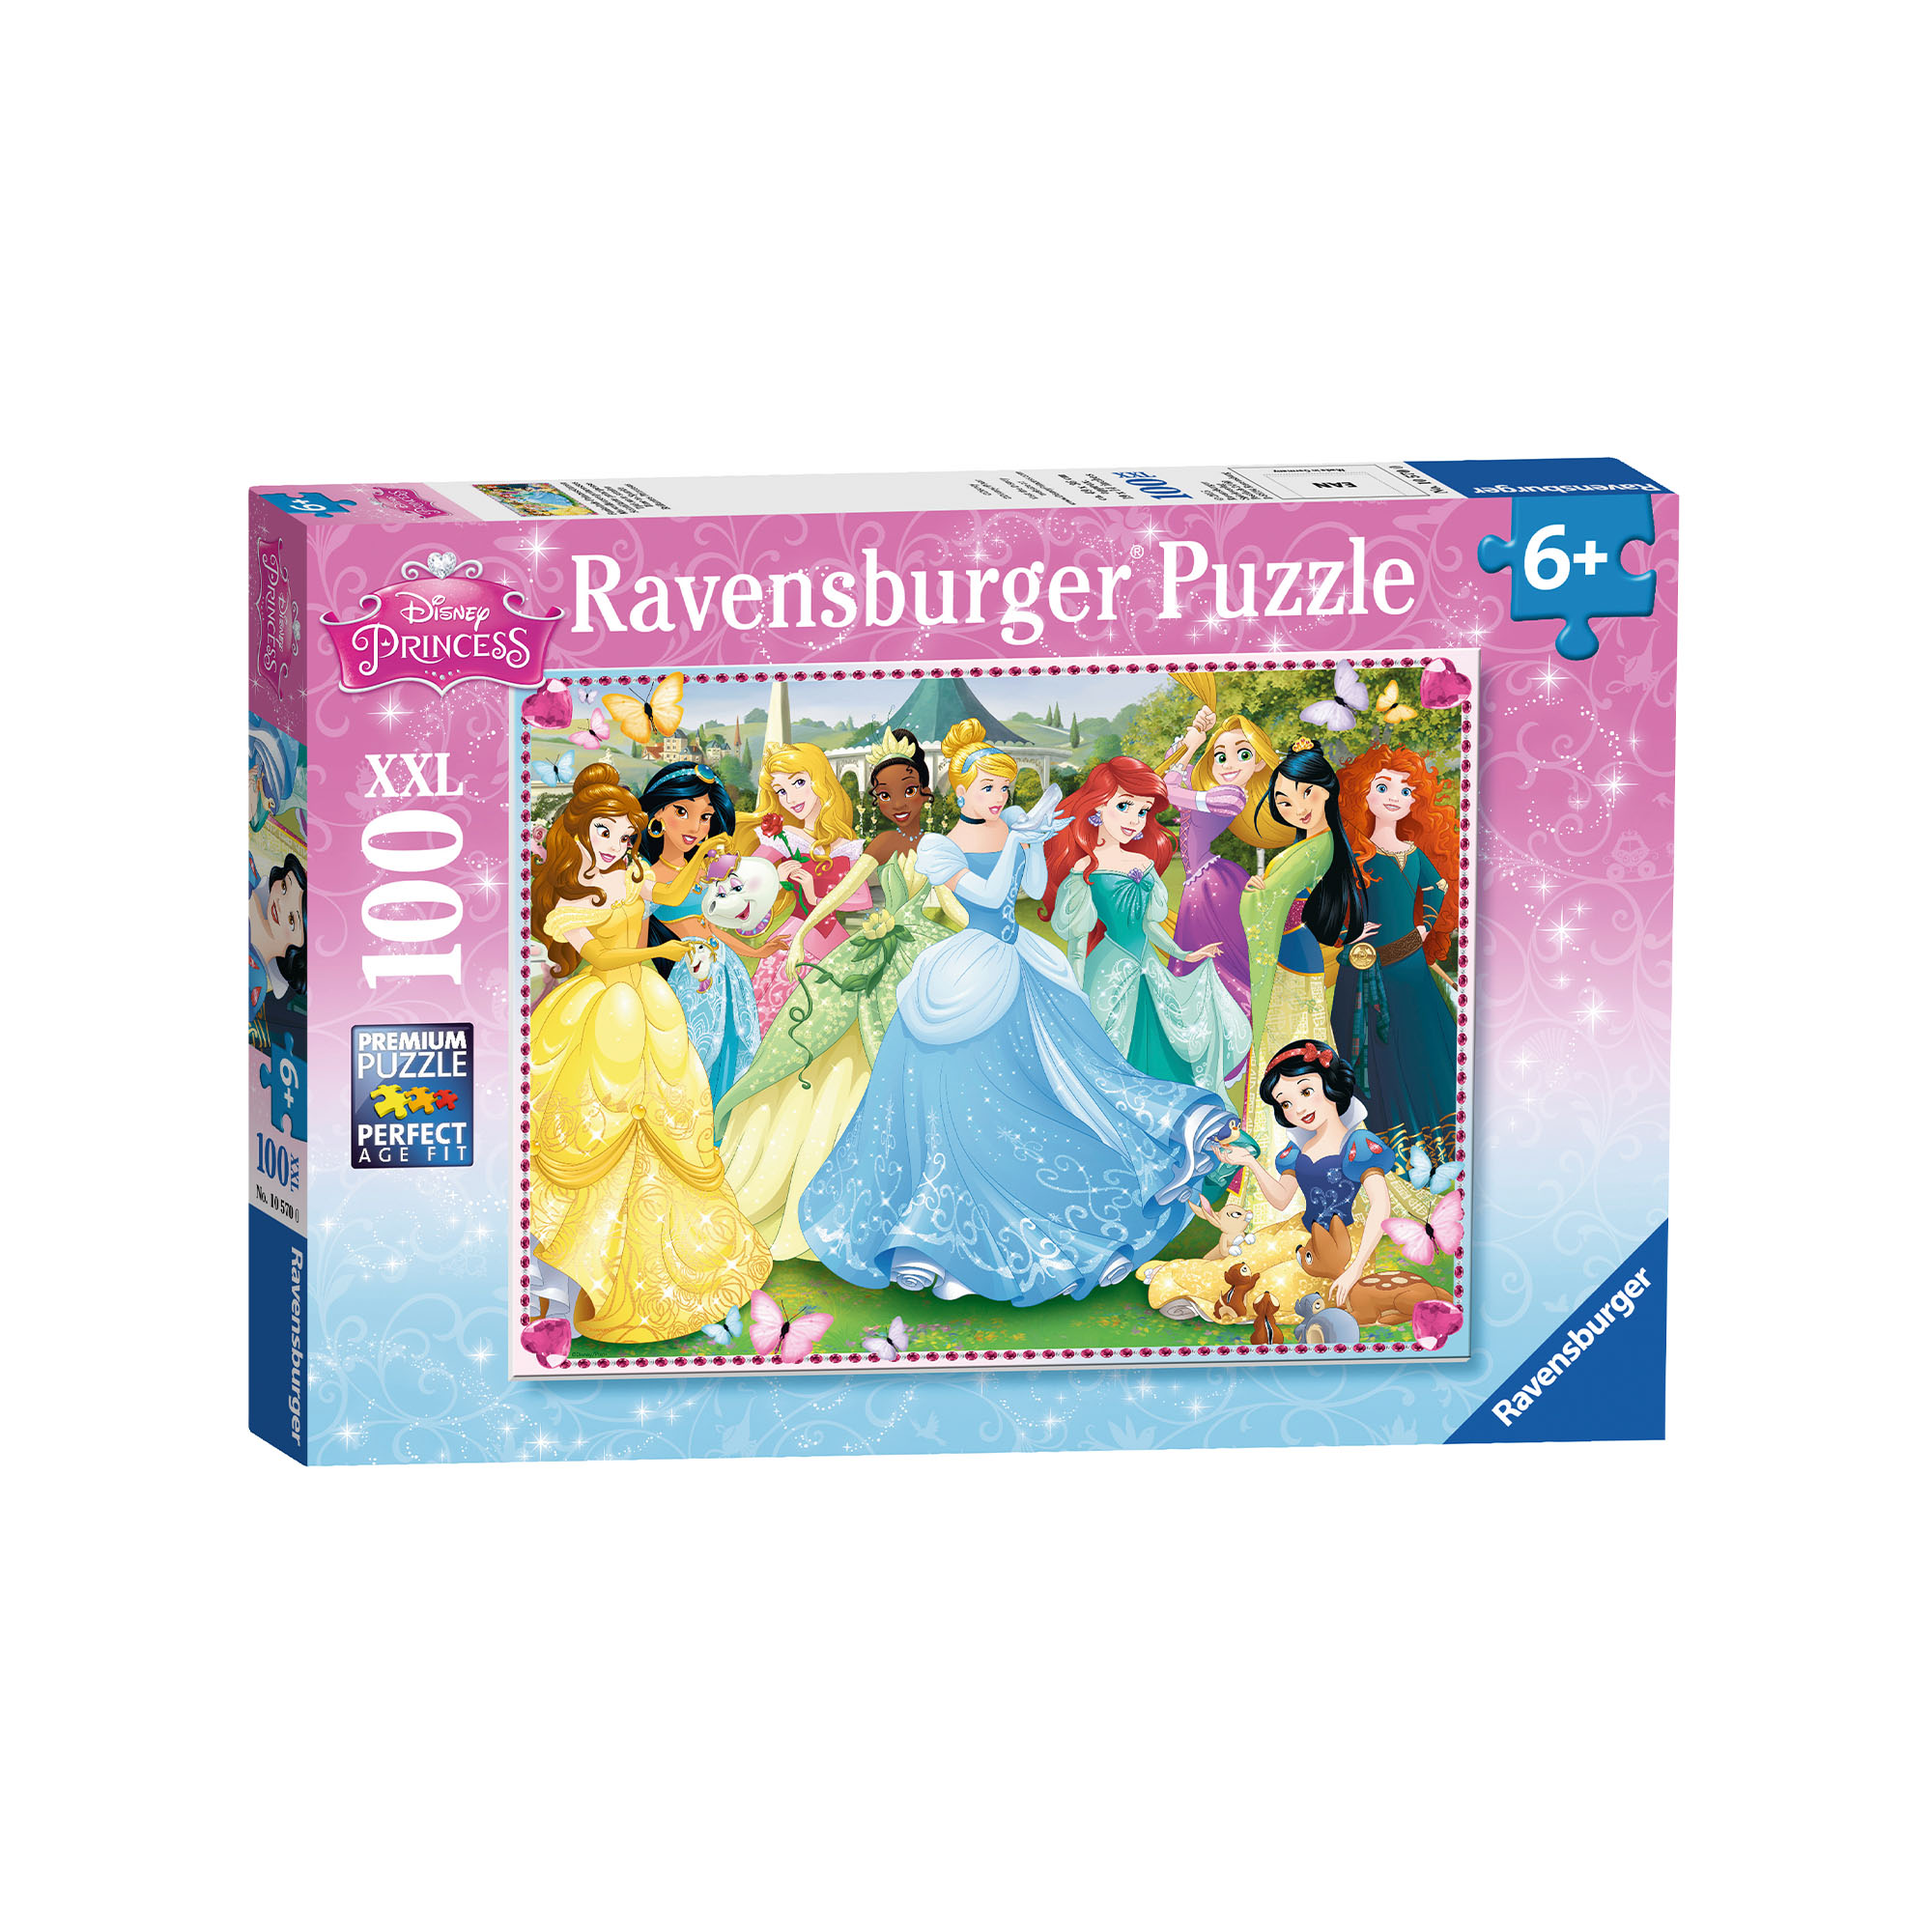 Ravensburger Puzzle 100 pezzi 10570 - Principesse Disney A, , large